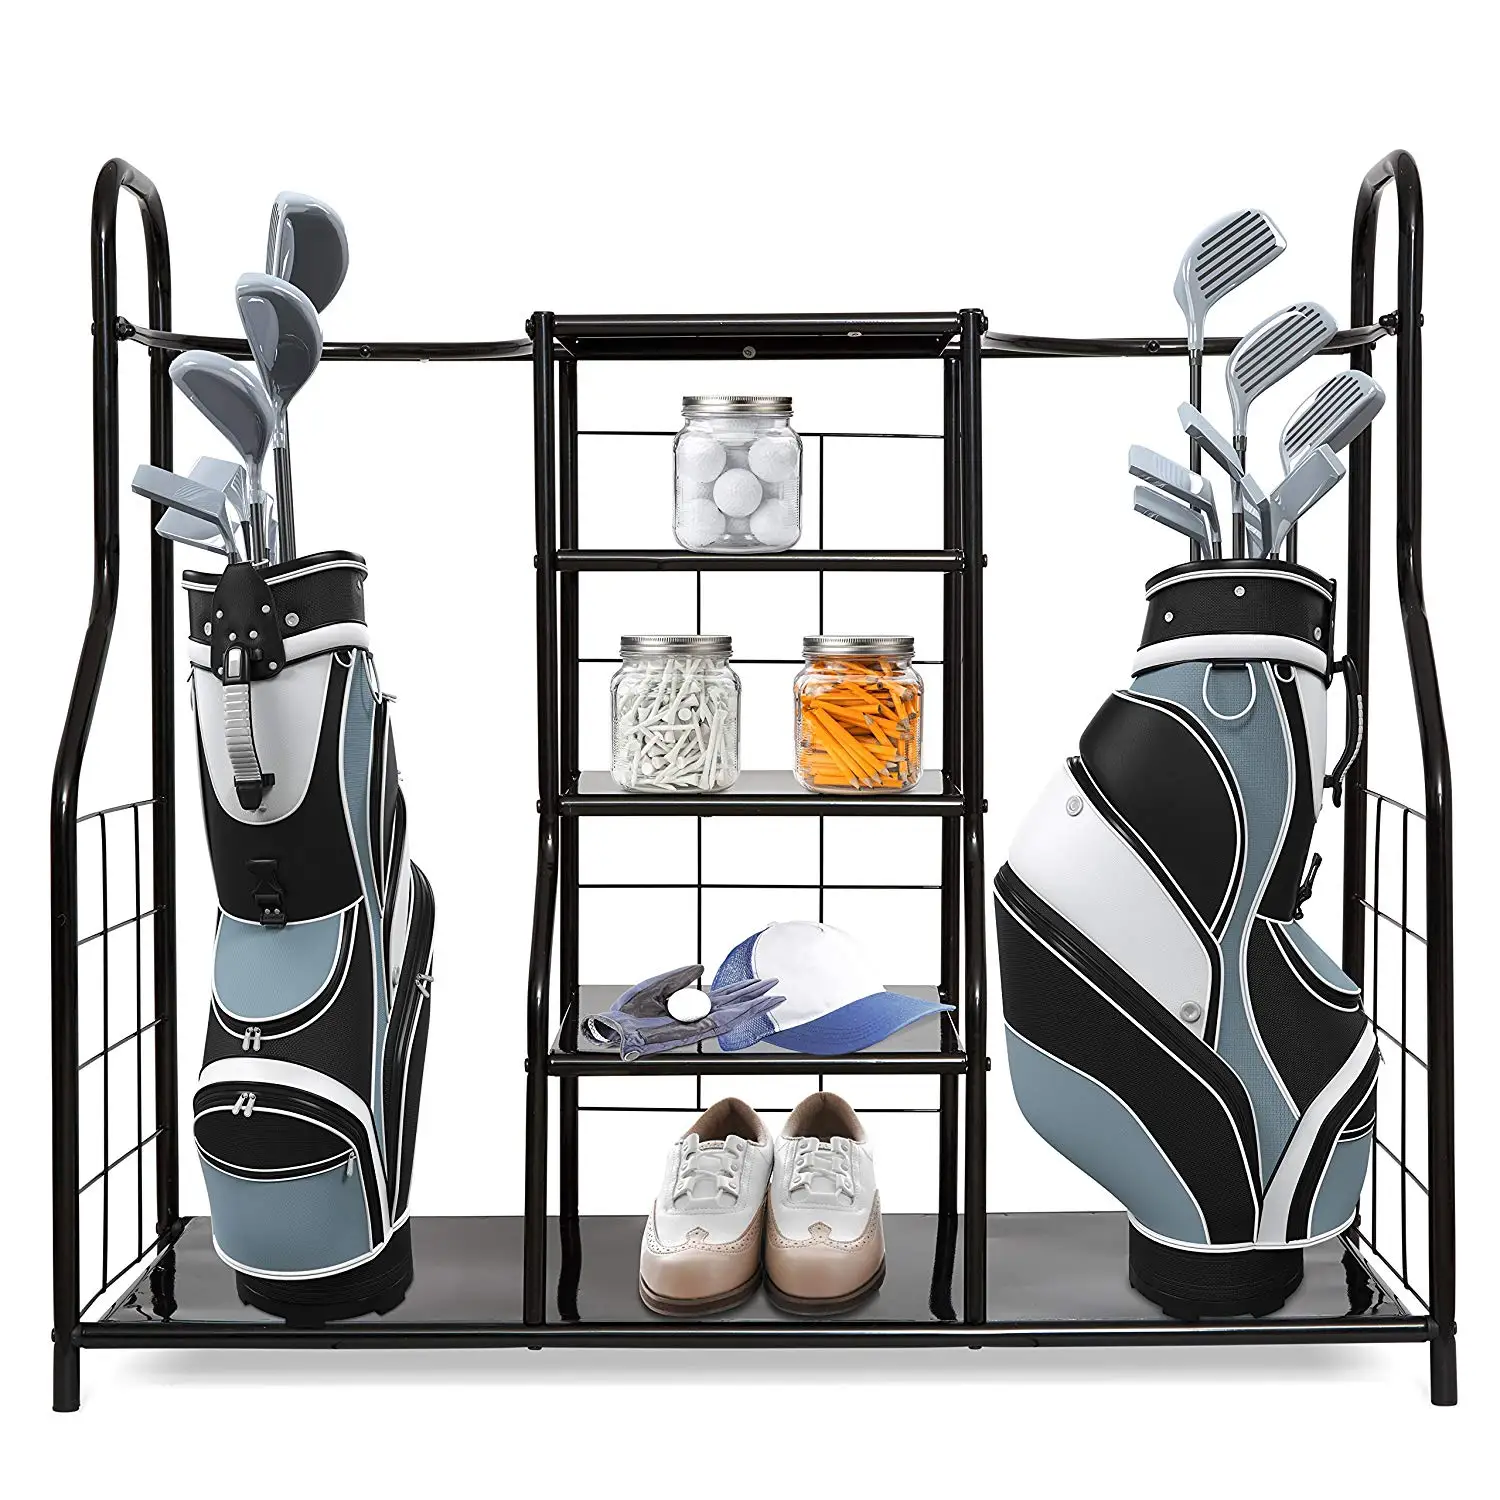 Golf Bag Storage Rack Organizer For Golf Bag And Accessories - Buy Golf